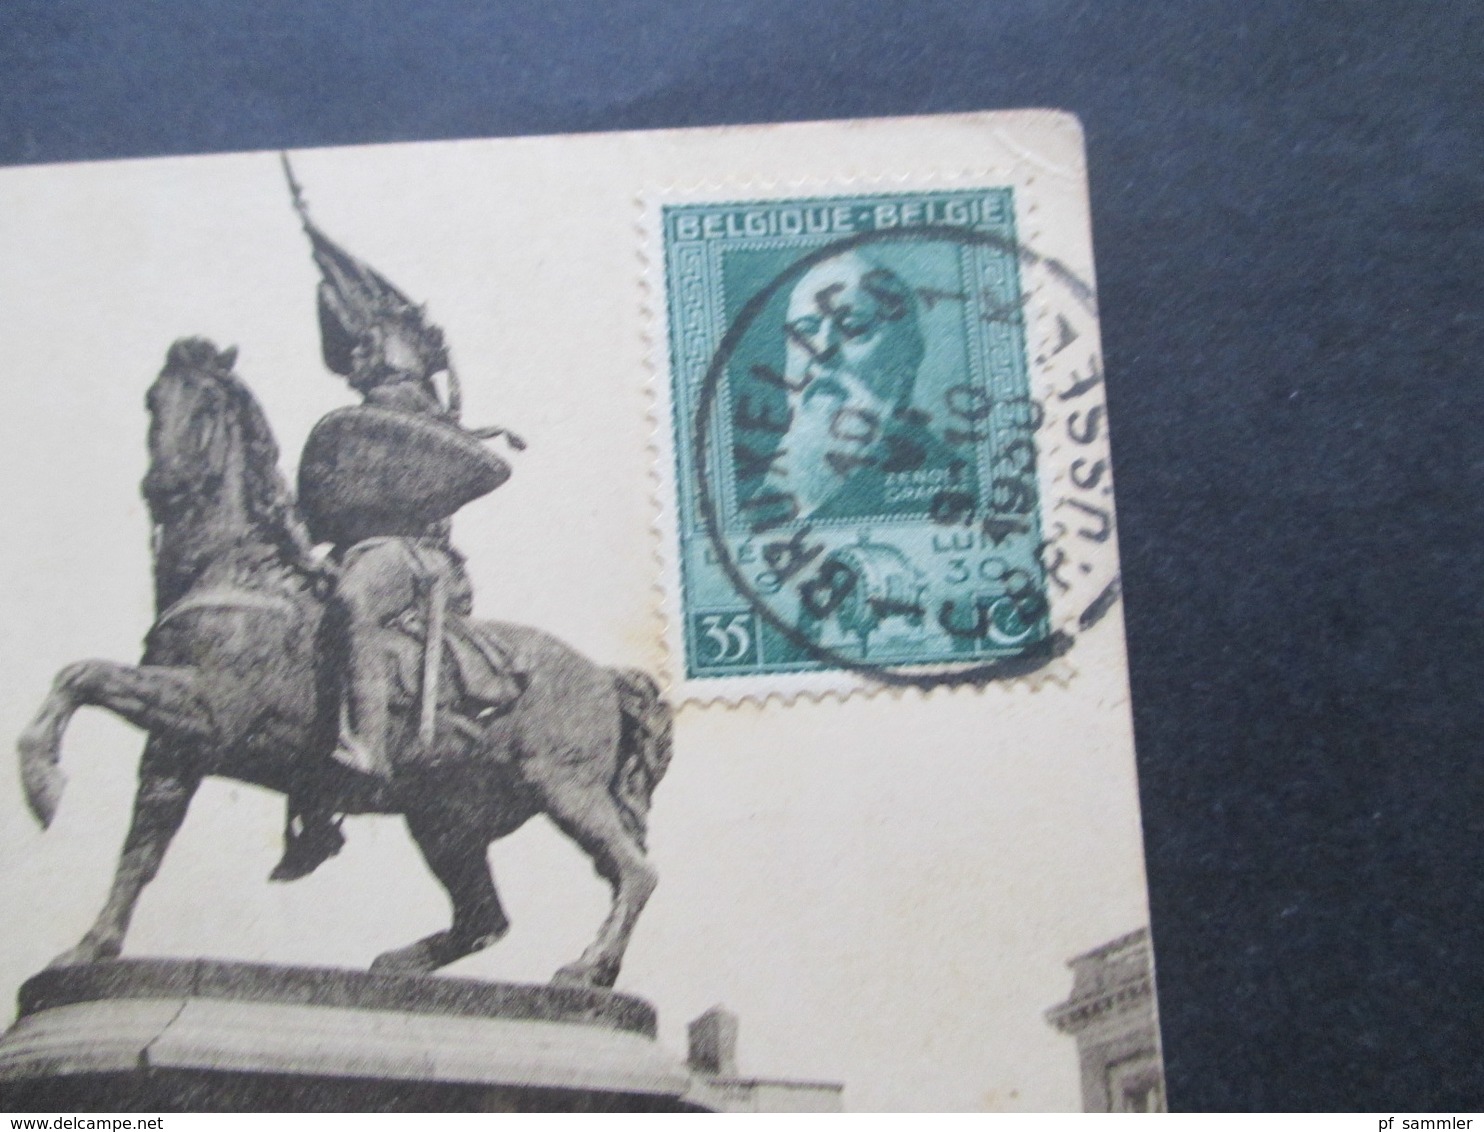 Belgien 1930 Bildseitig Frankierte AK Bruxelles Statue De Godefroid De Bouillen Nach Jugoslawien Gesendet! - Covers & Documents